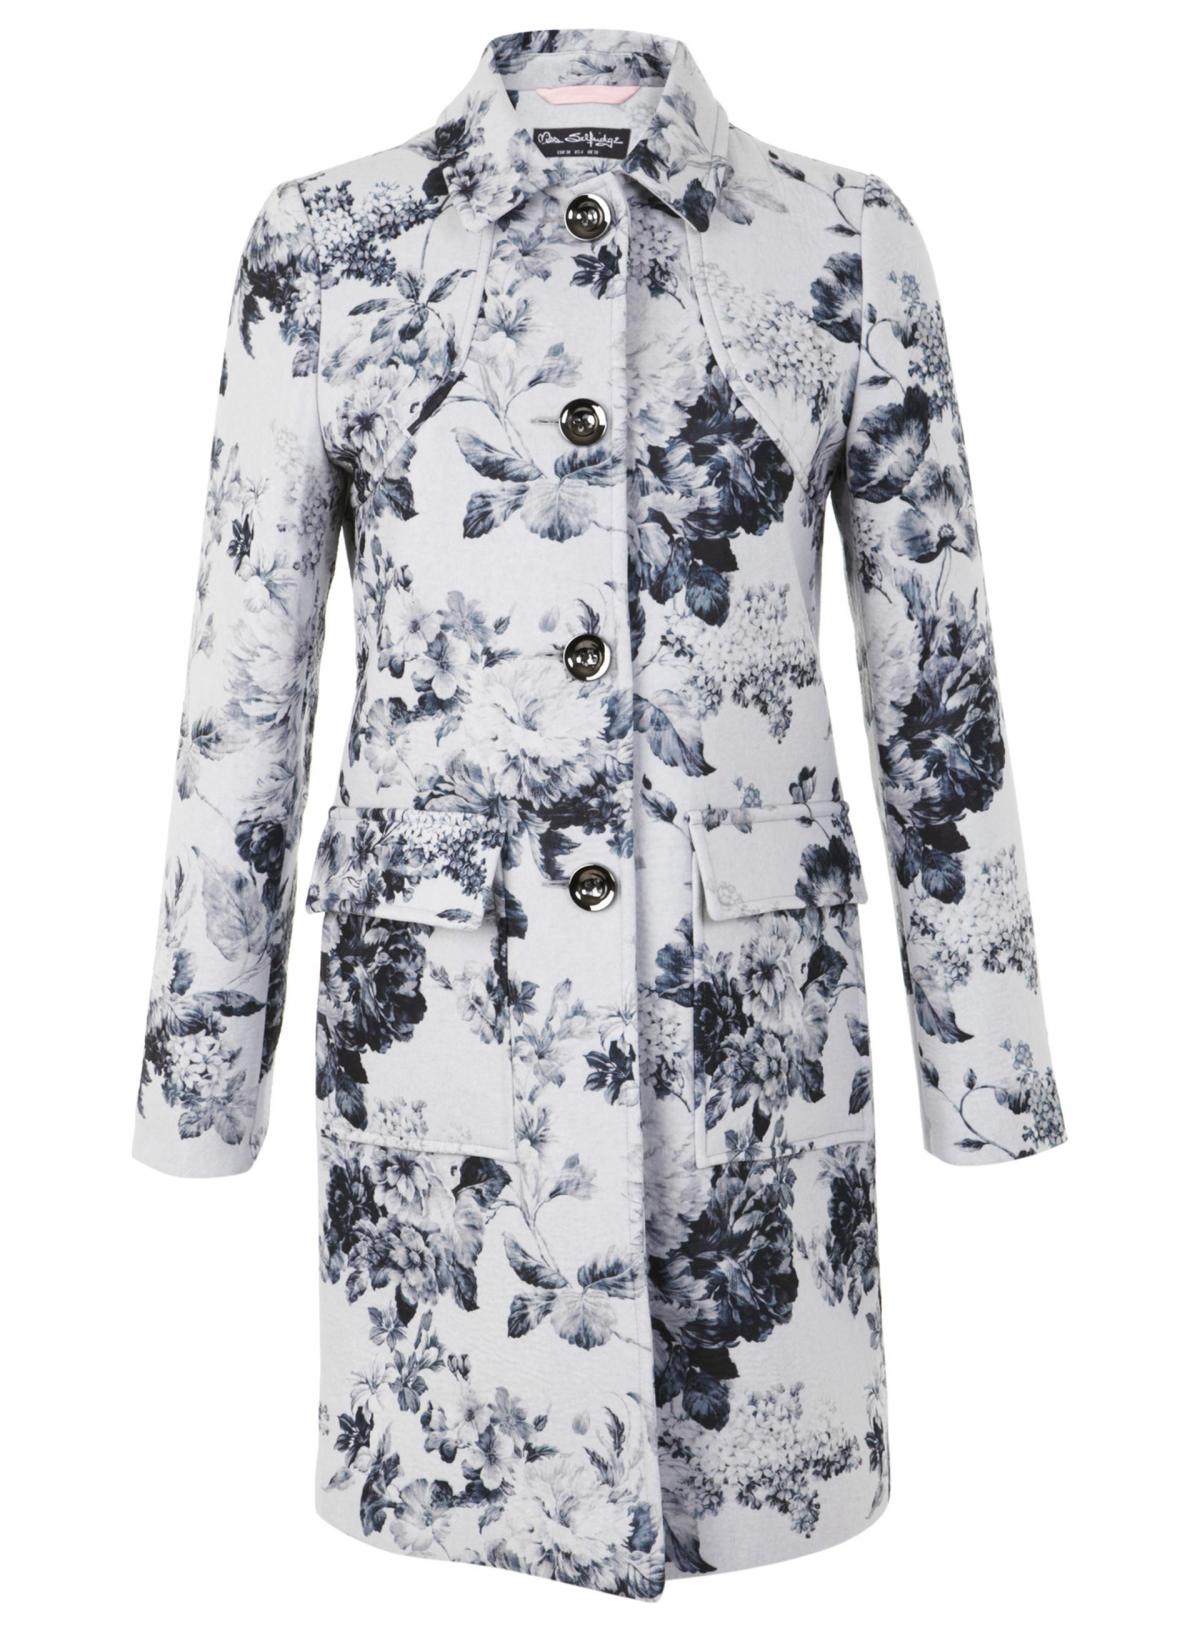 Miss Selfridge in BHS, monochrome floral jacket, £89